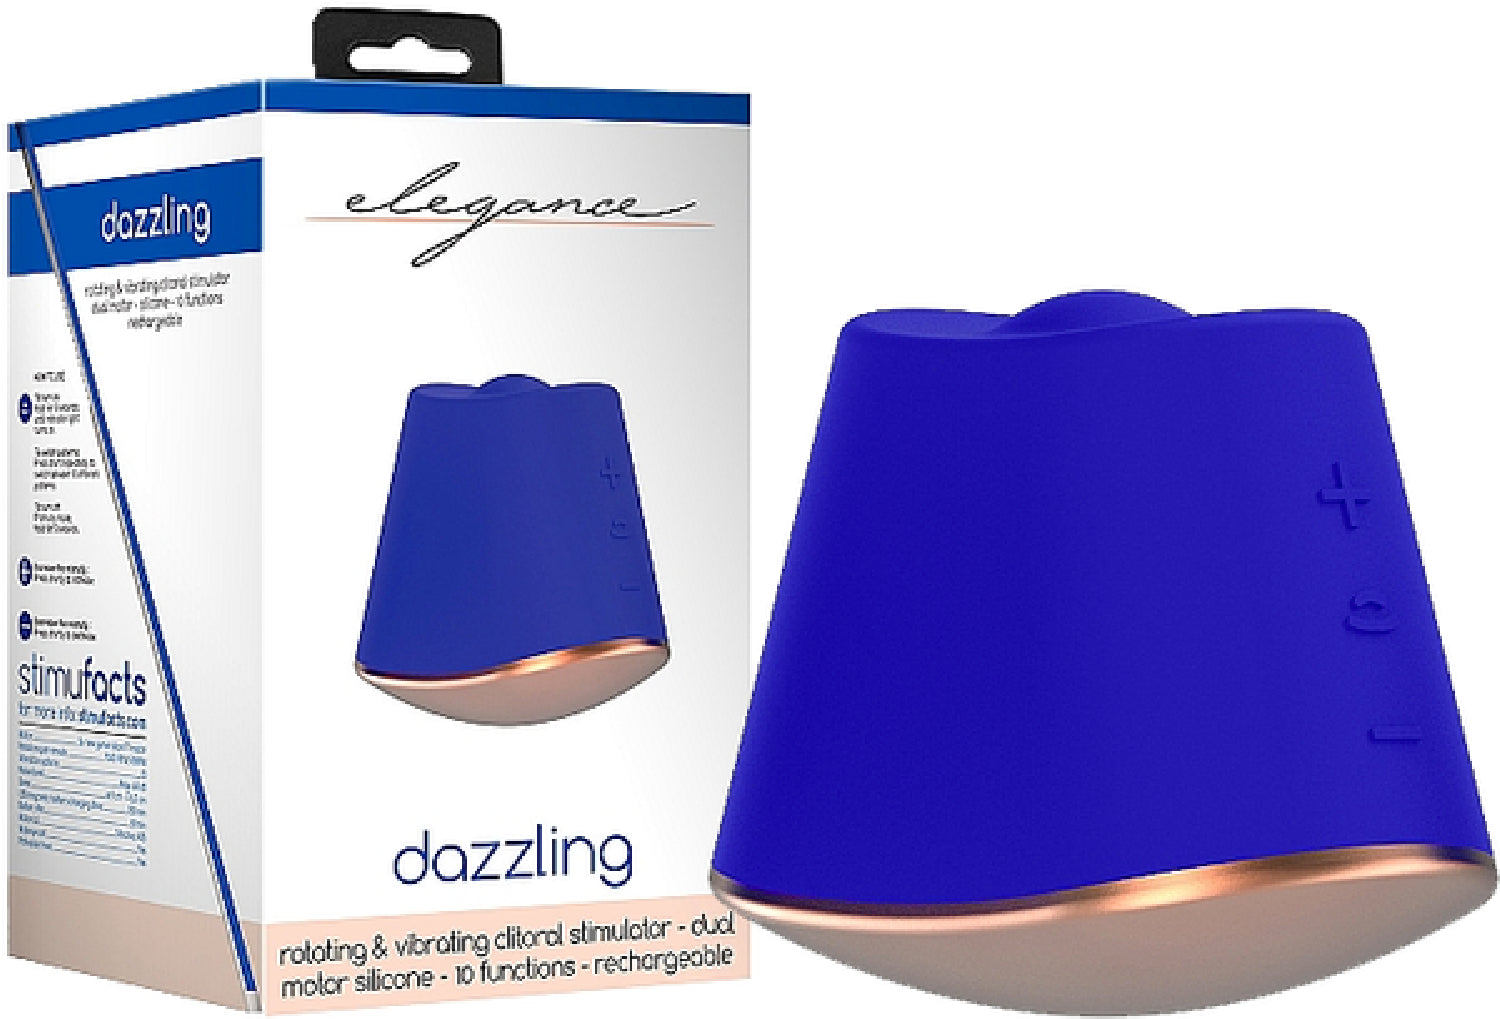 Rotating & Vibrating Clitoral Stimulator - Dazzling Blue - Club X